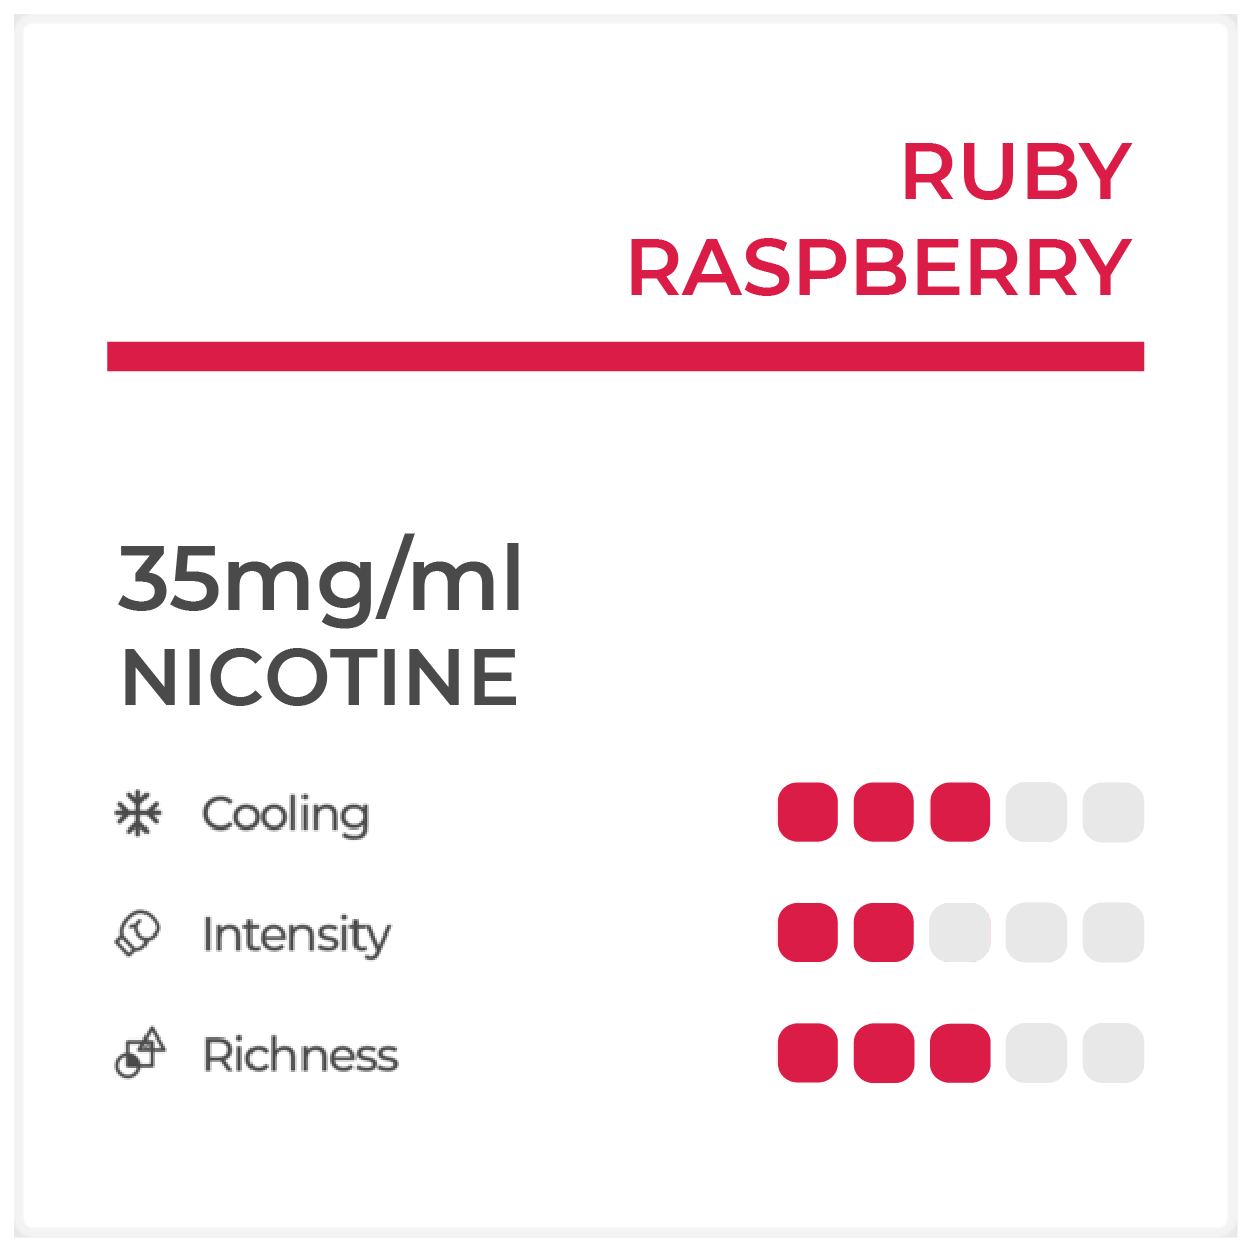 Ruby Raspberry (Carton) 35mg/mL